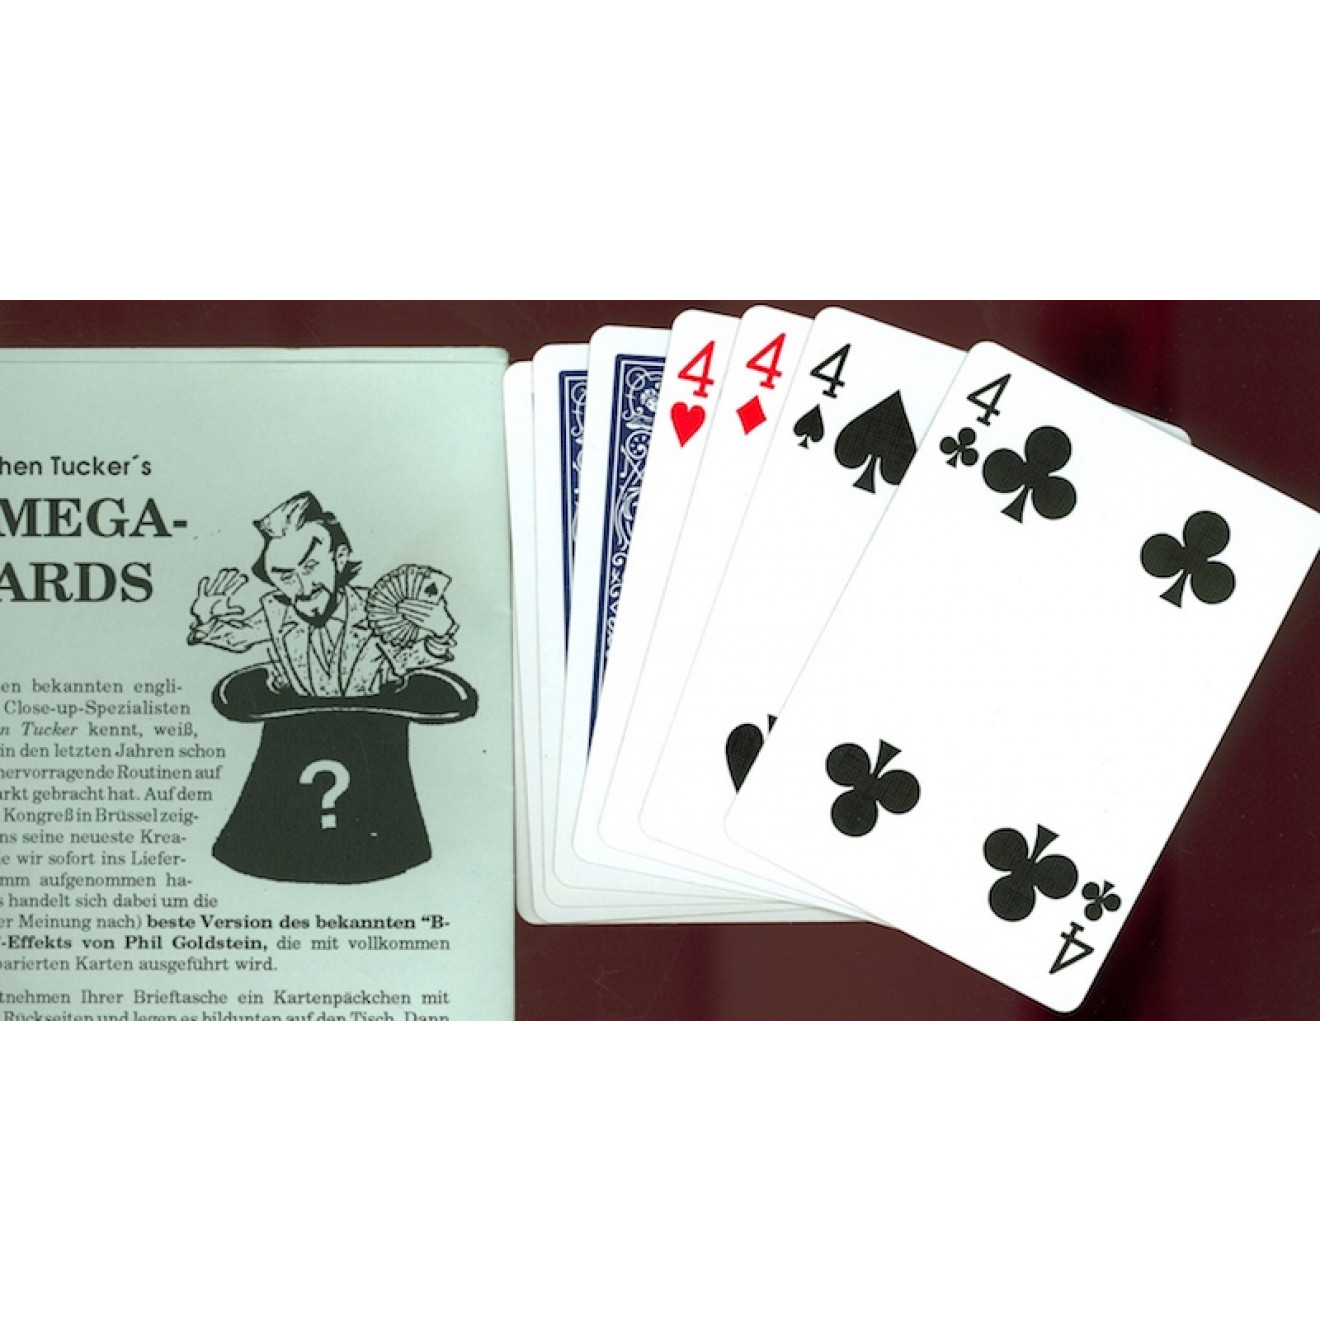 Omega Cards